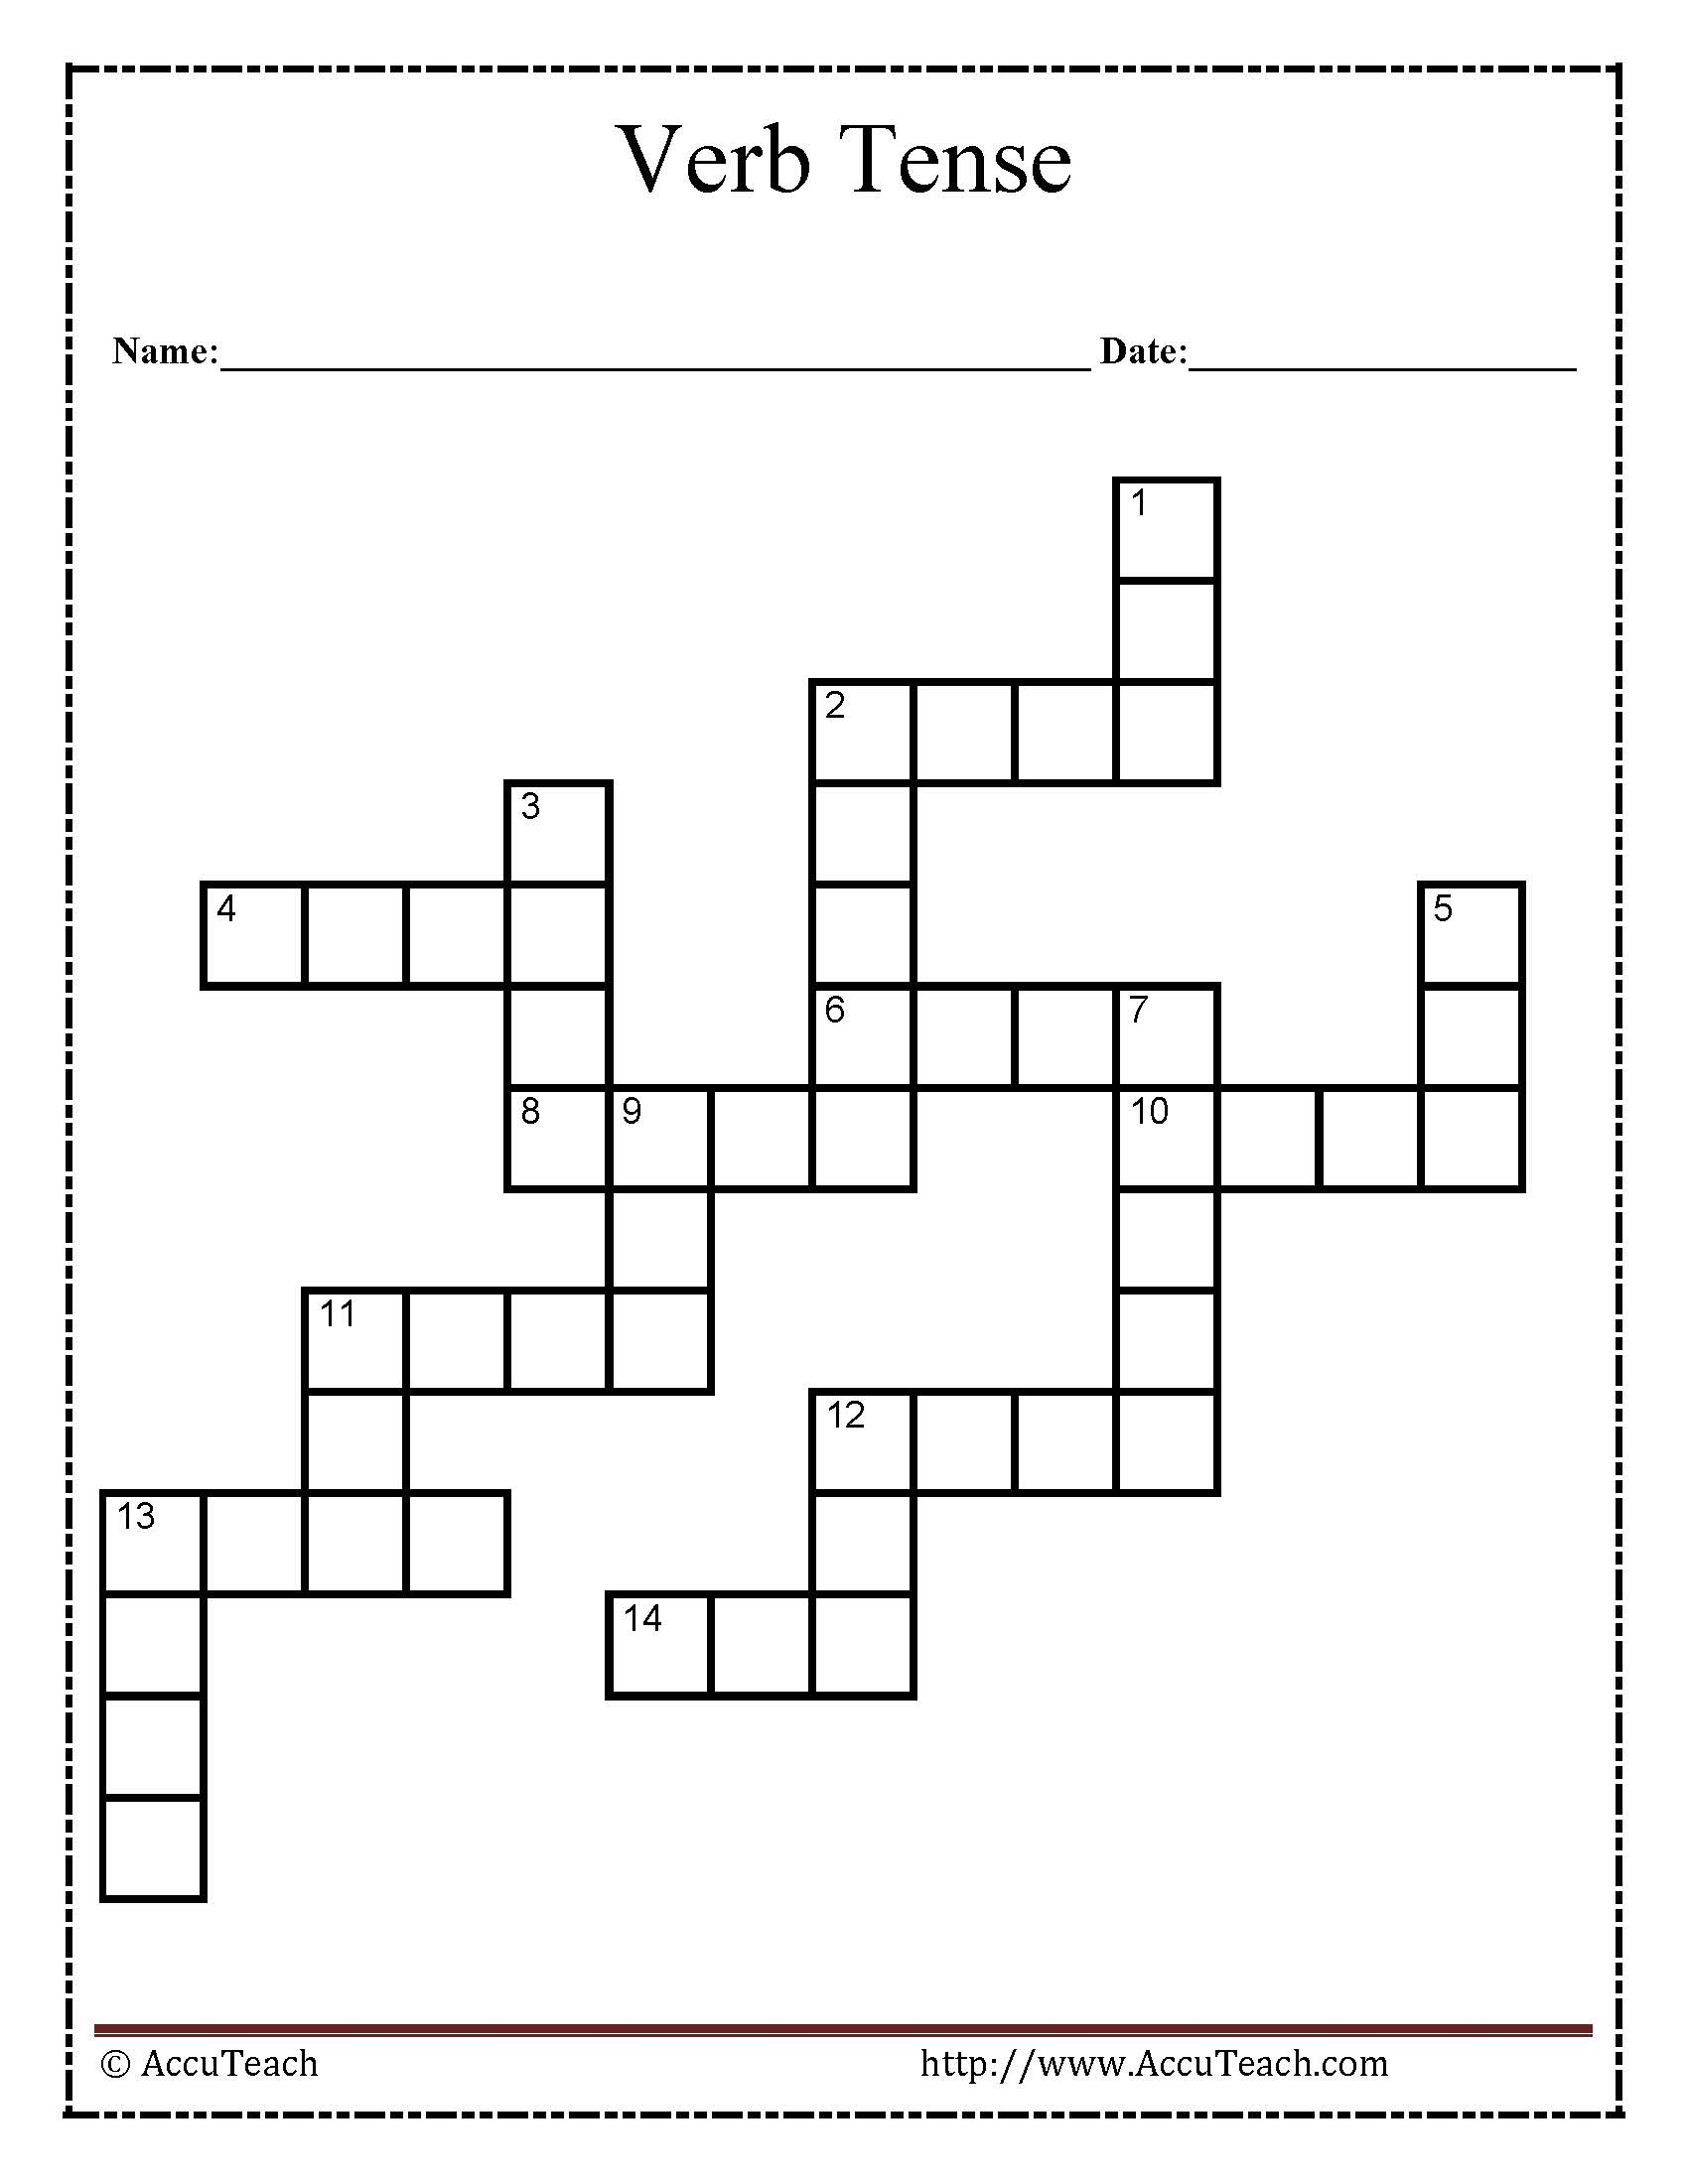 Verb Tense Crossword Puzzle Worksheet - Crossword Puzzles Printable 7Th Grade